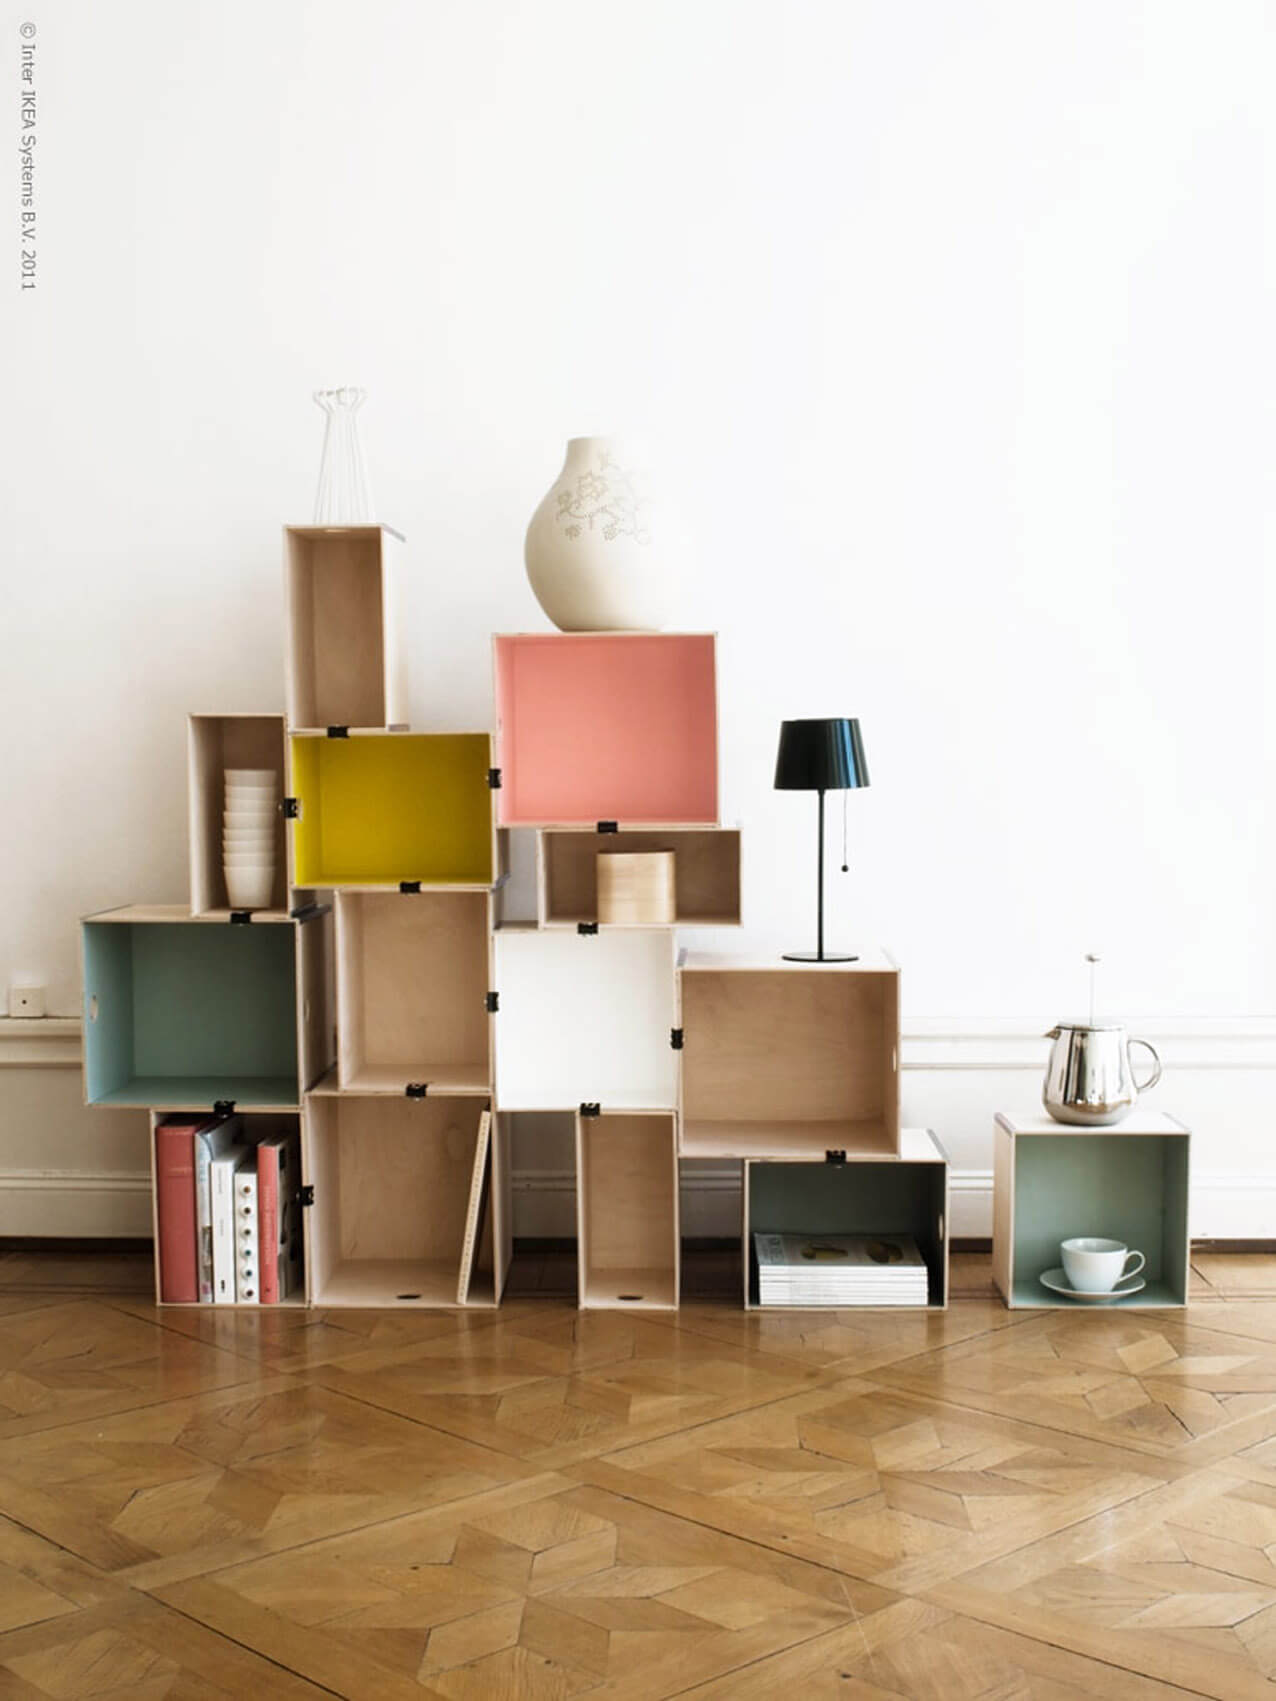 Cubist Plywood Box Bookshelf with Binder Clips